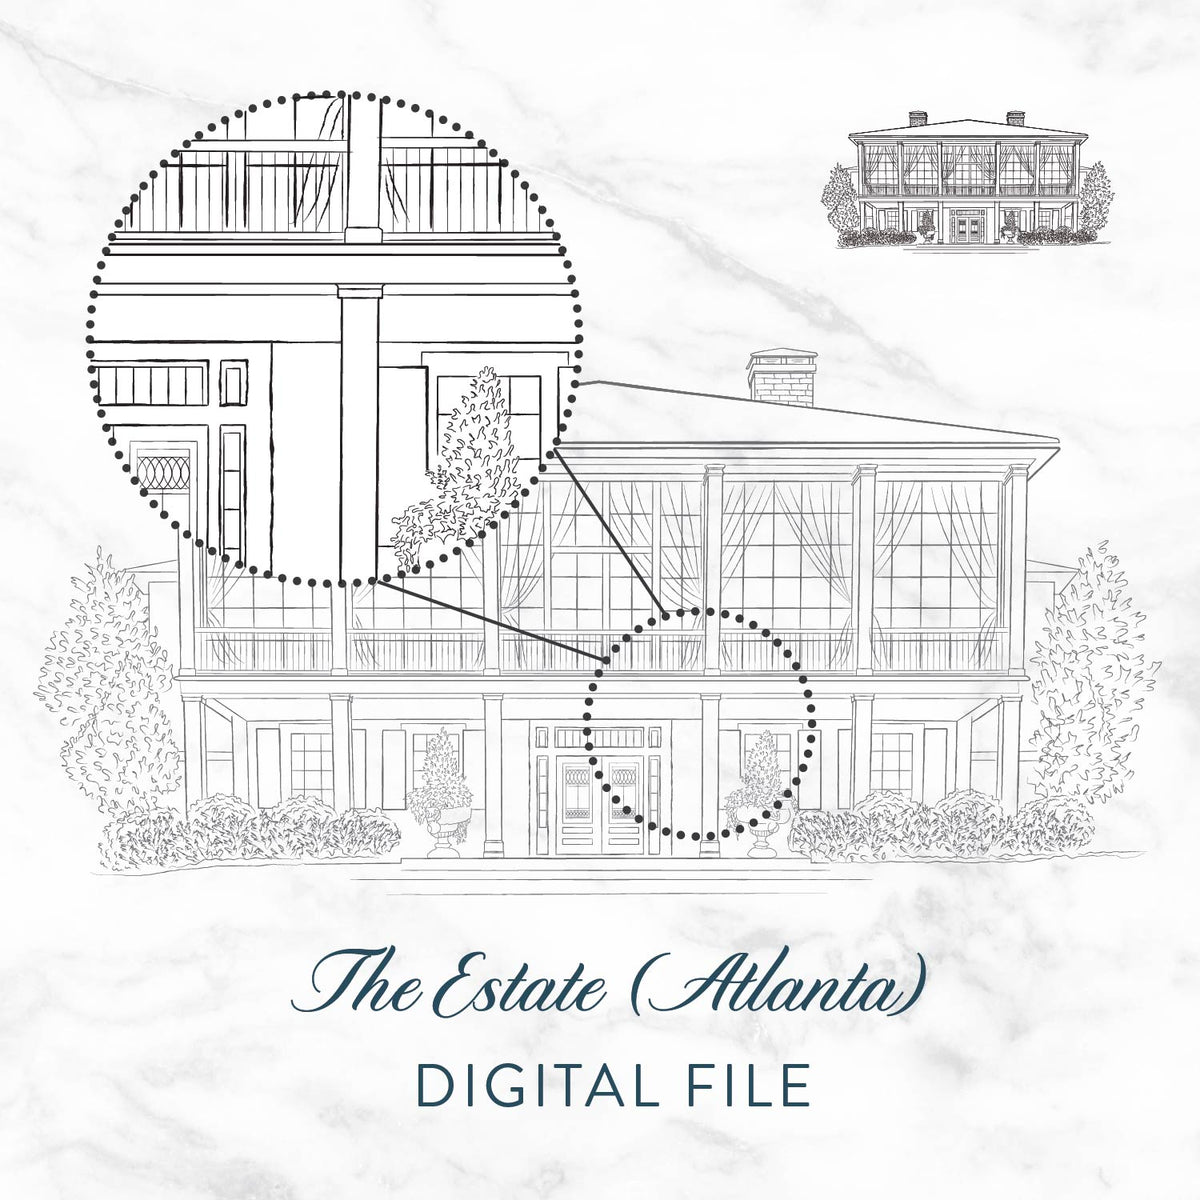 The Estate (Atlanta) Digital File